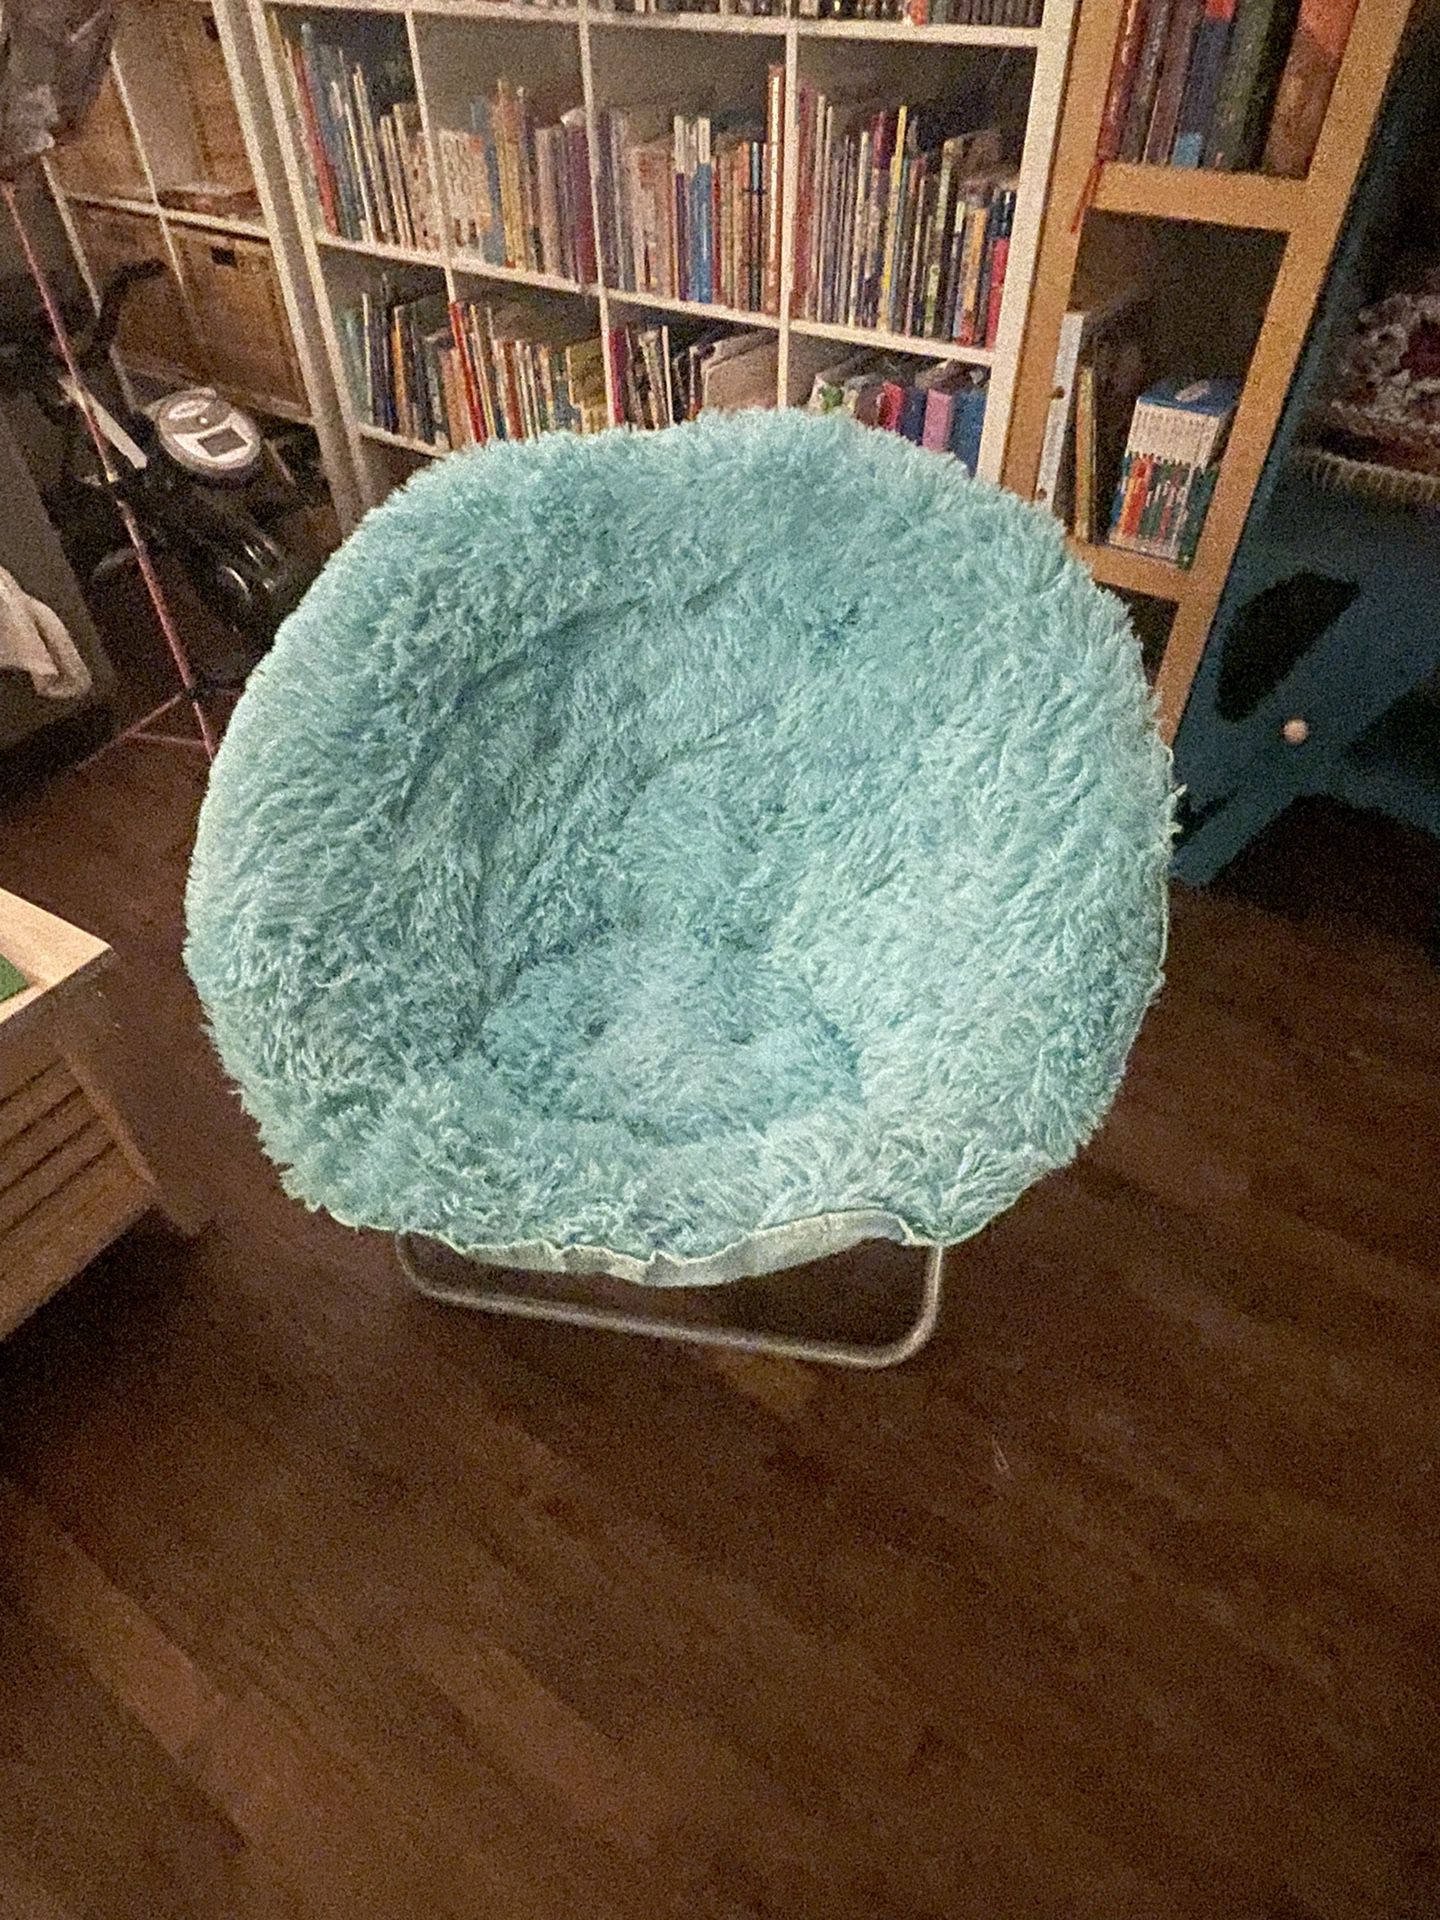 Moon Chair 